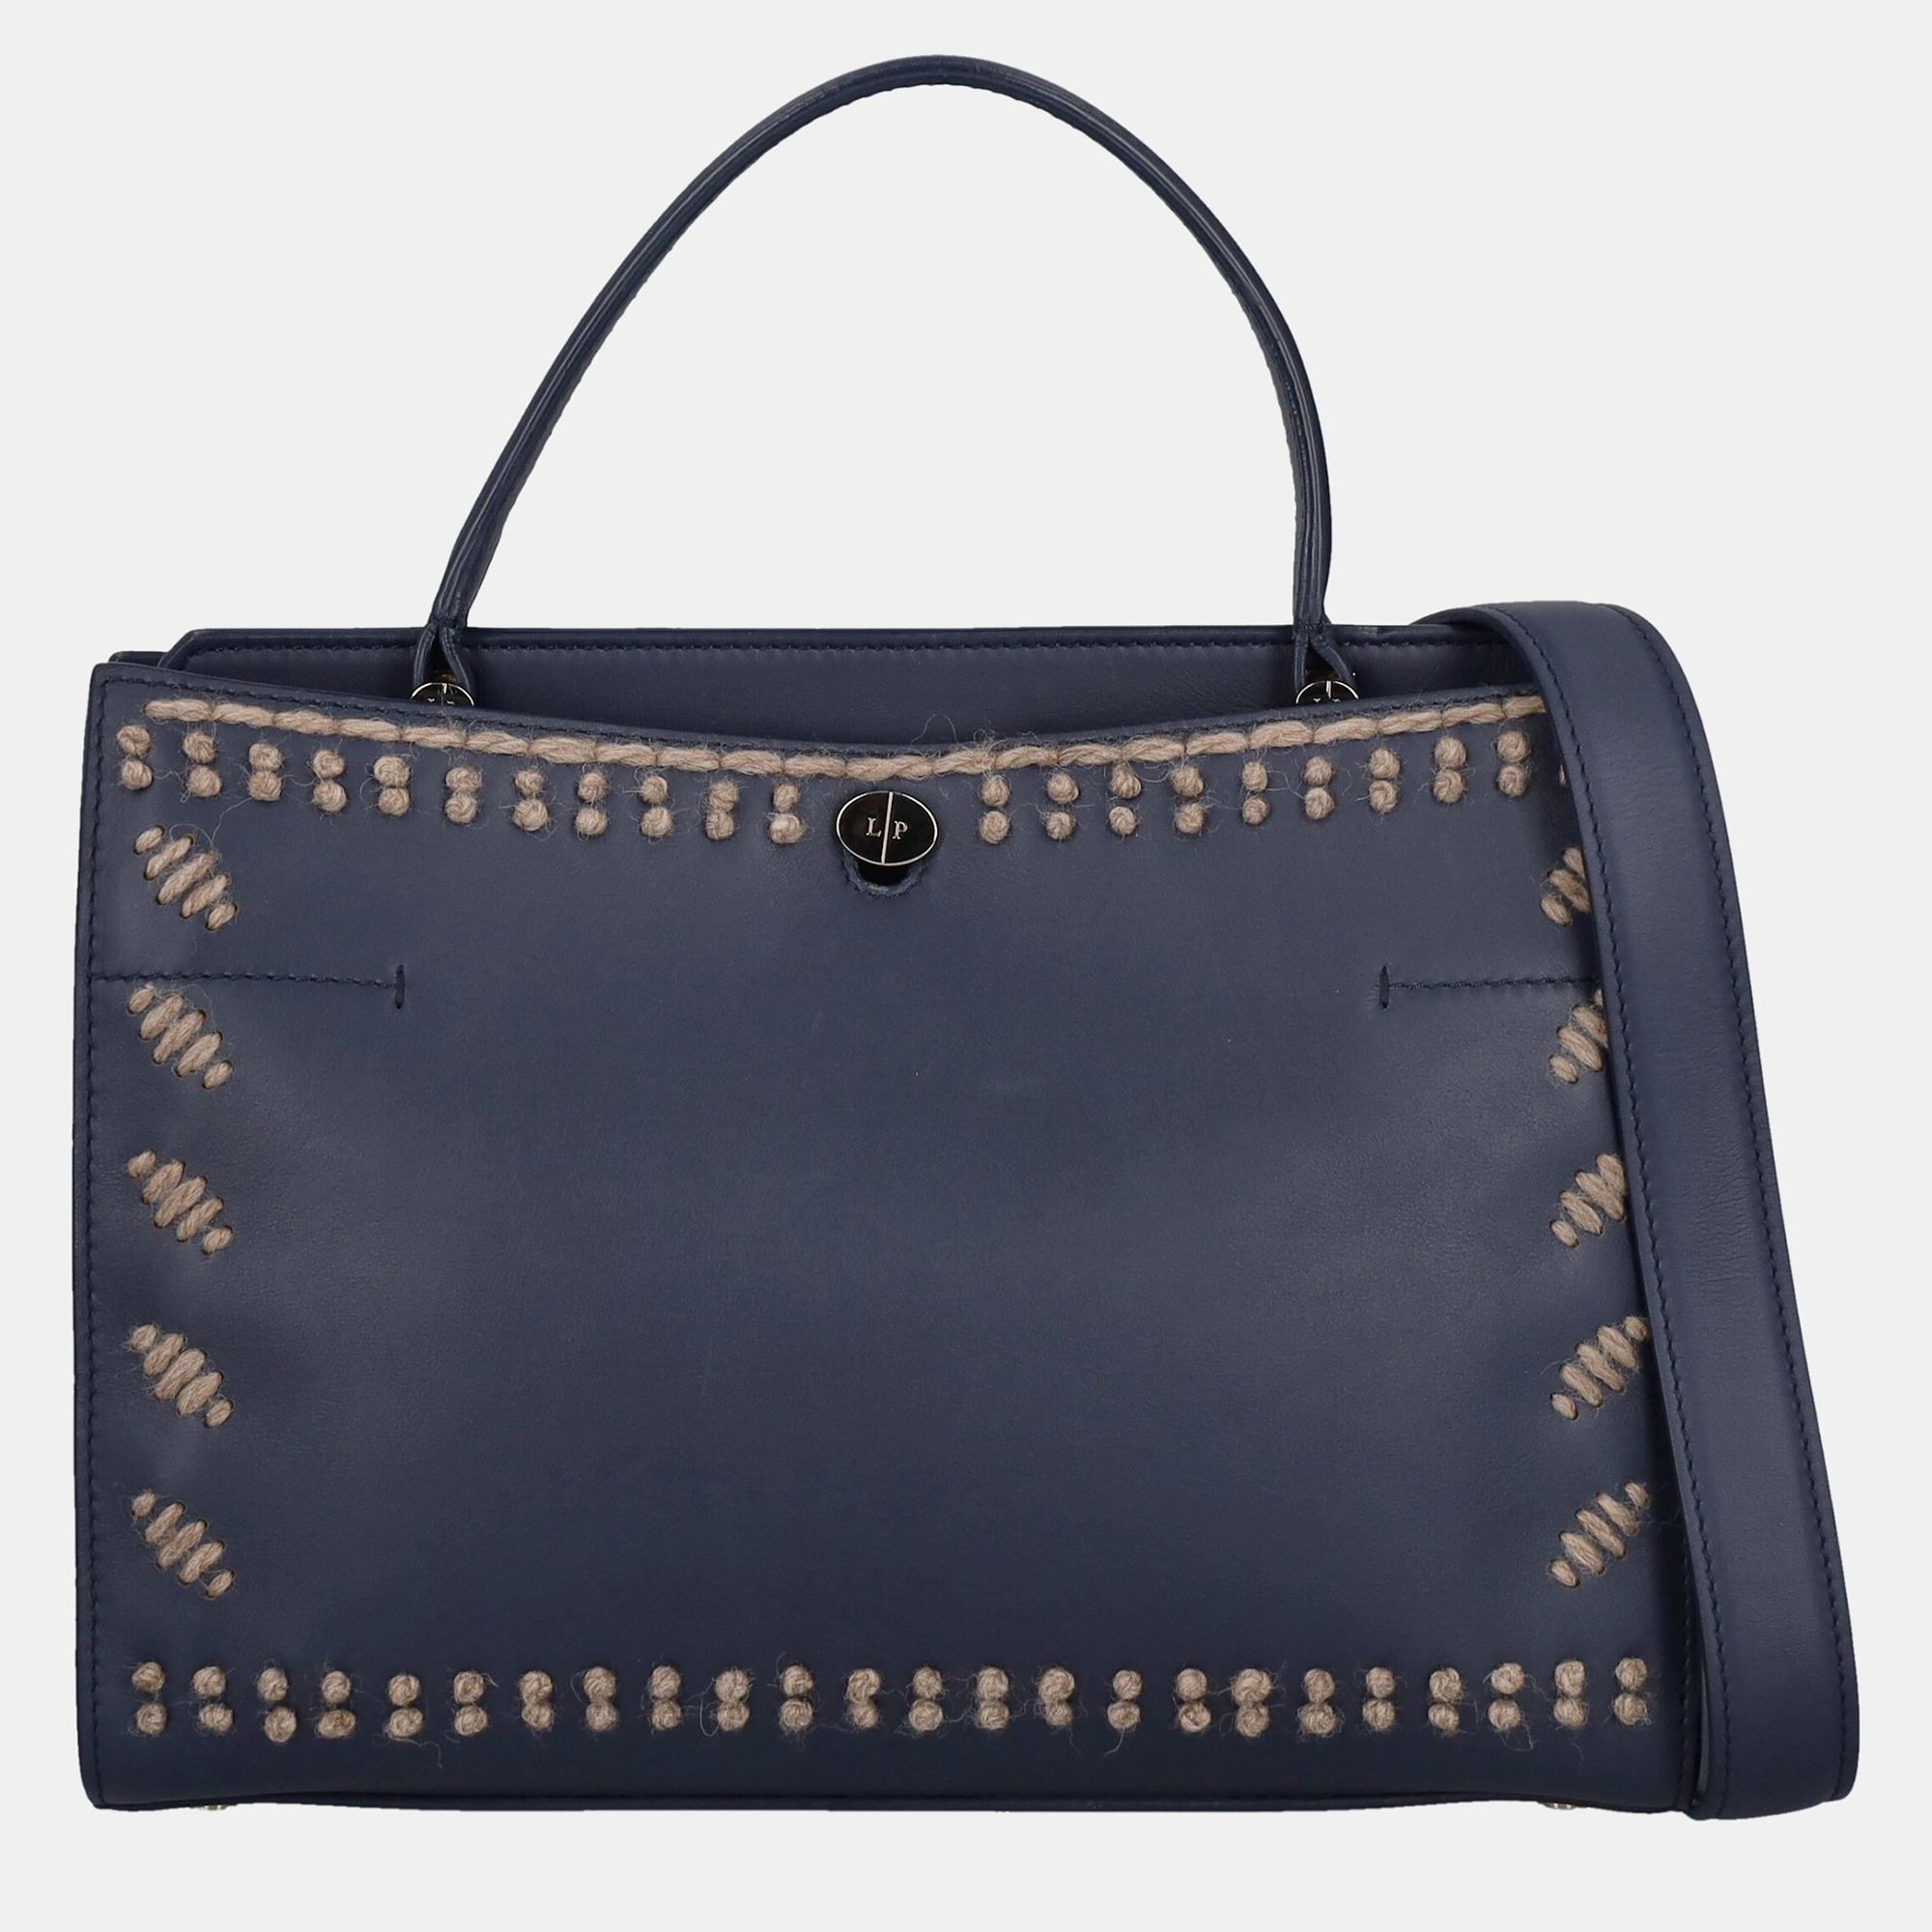 Loro Piana  Women's Leather Tote Bag - Grey - One Size